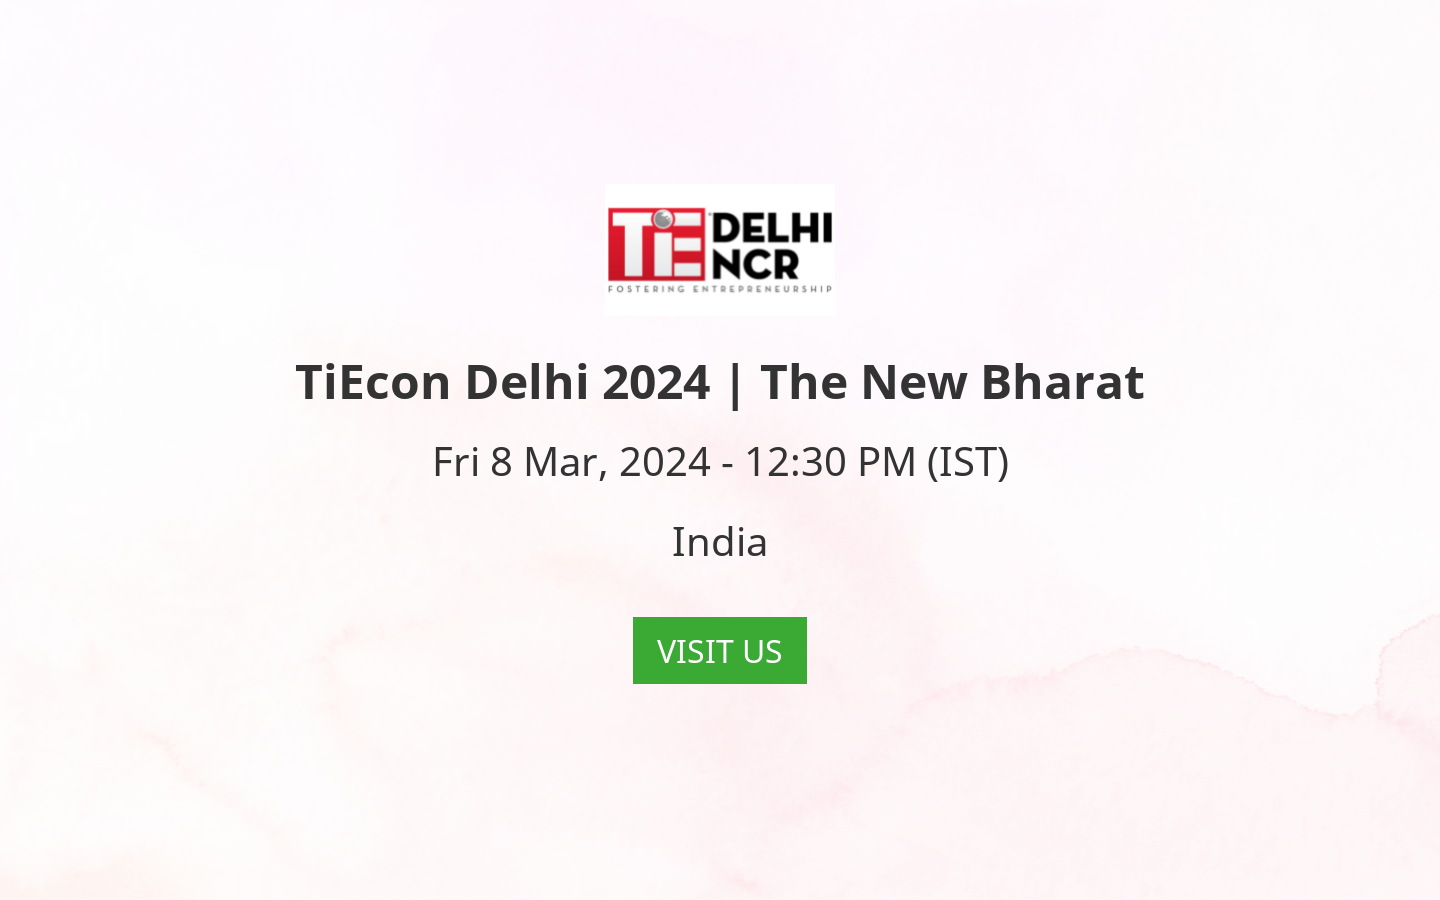 TiEcon Delhi 2024 The New Bharat